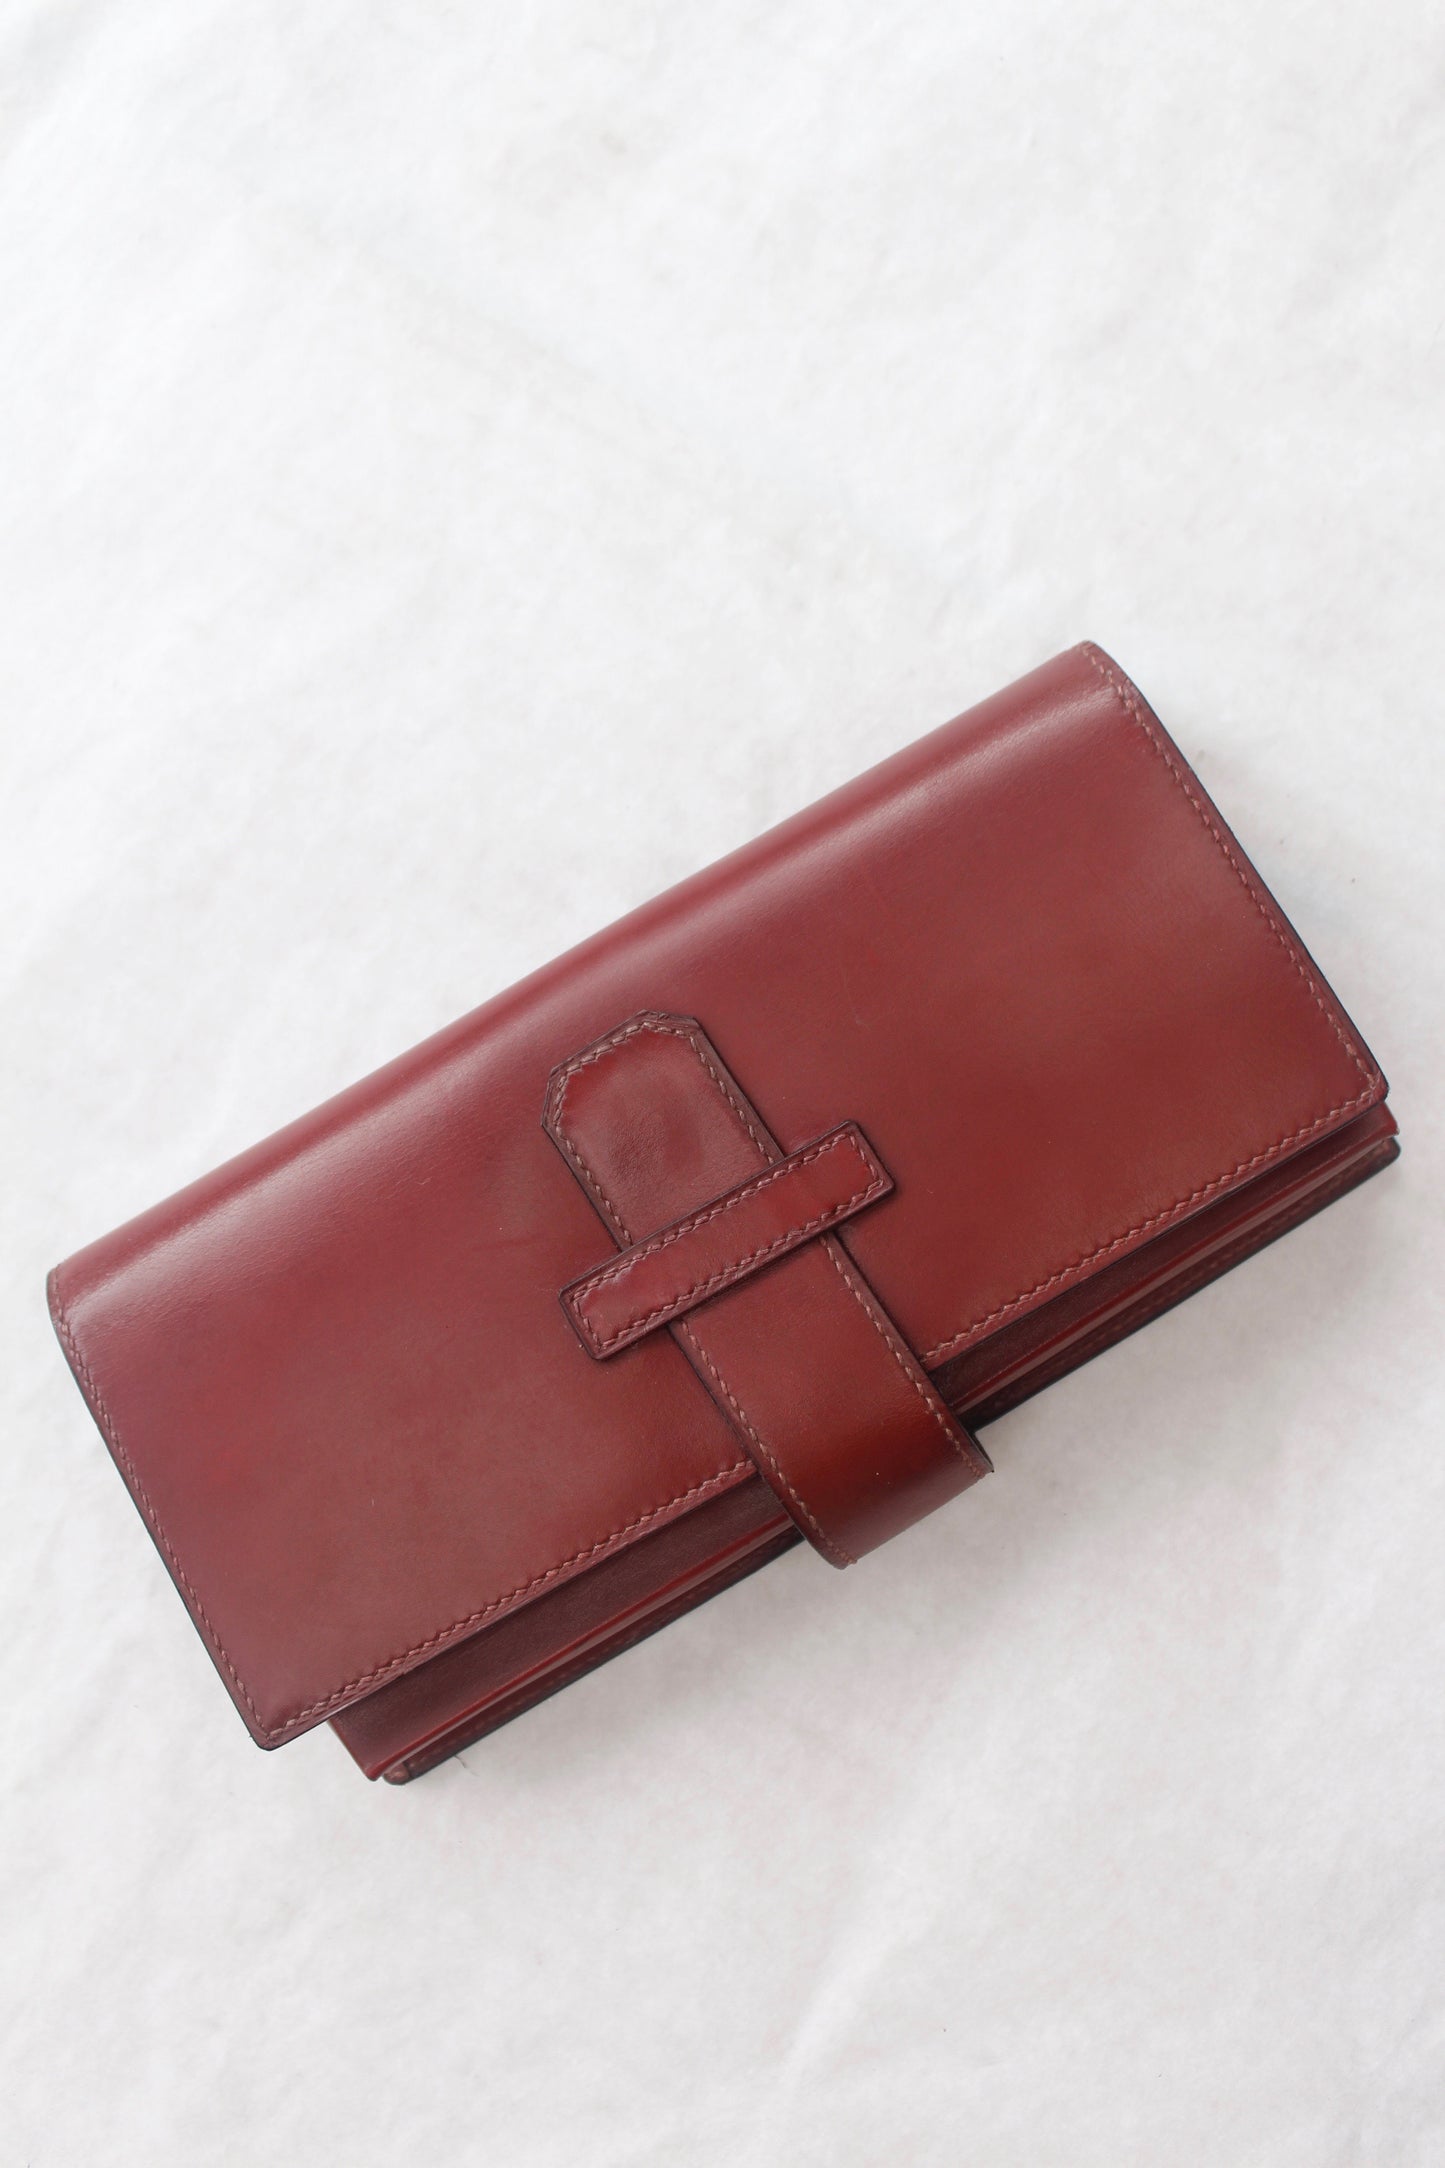 Hermès leather cards case